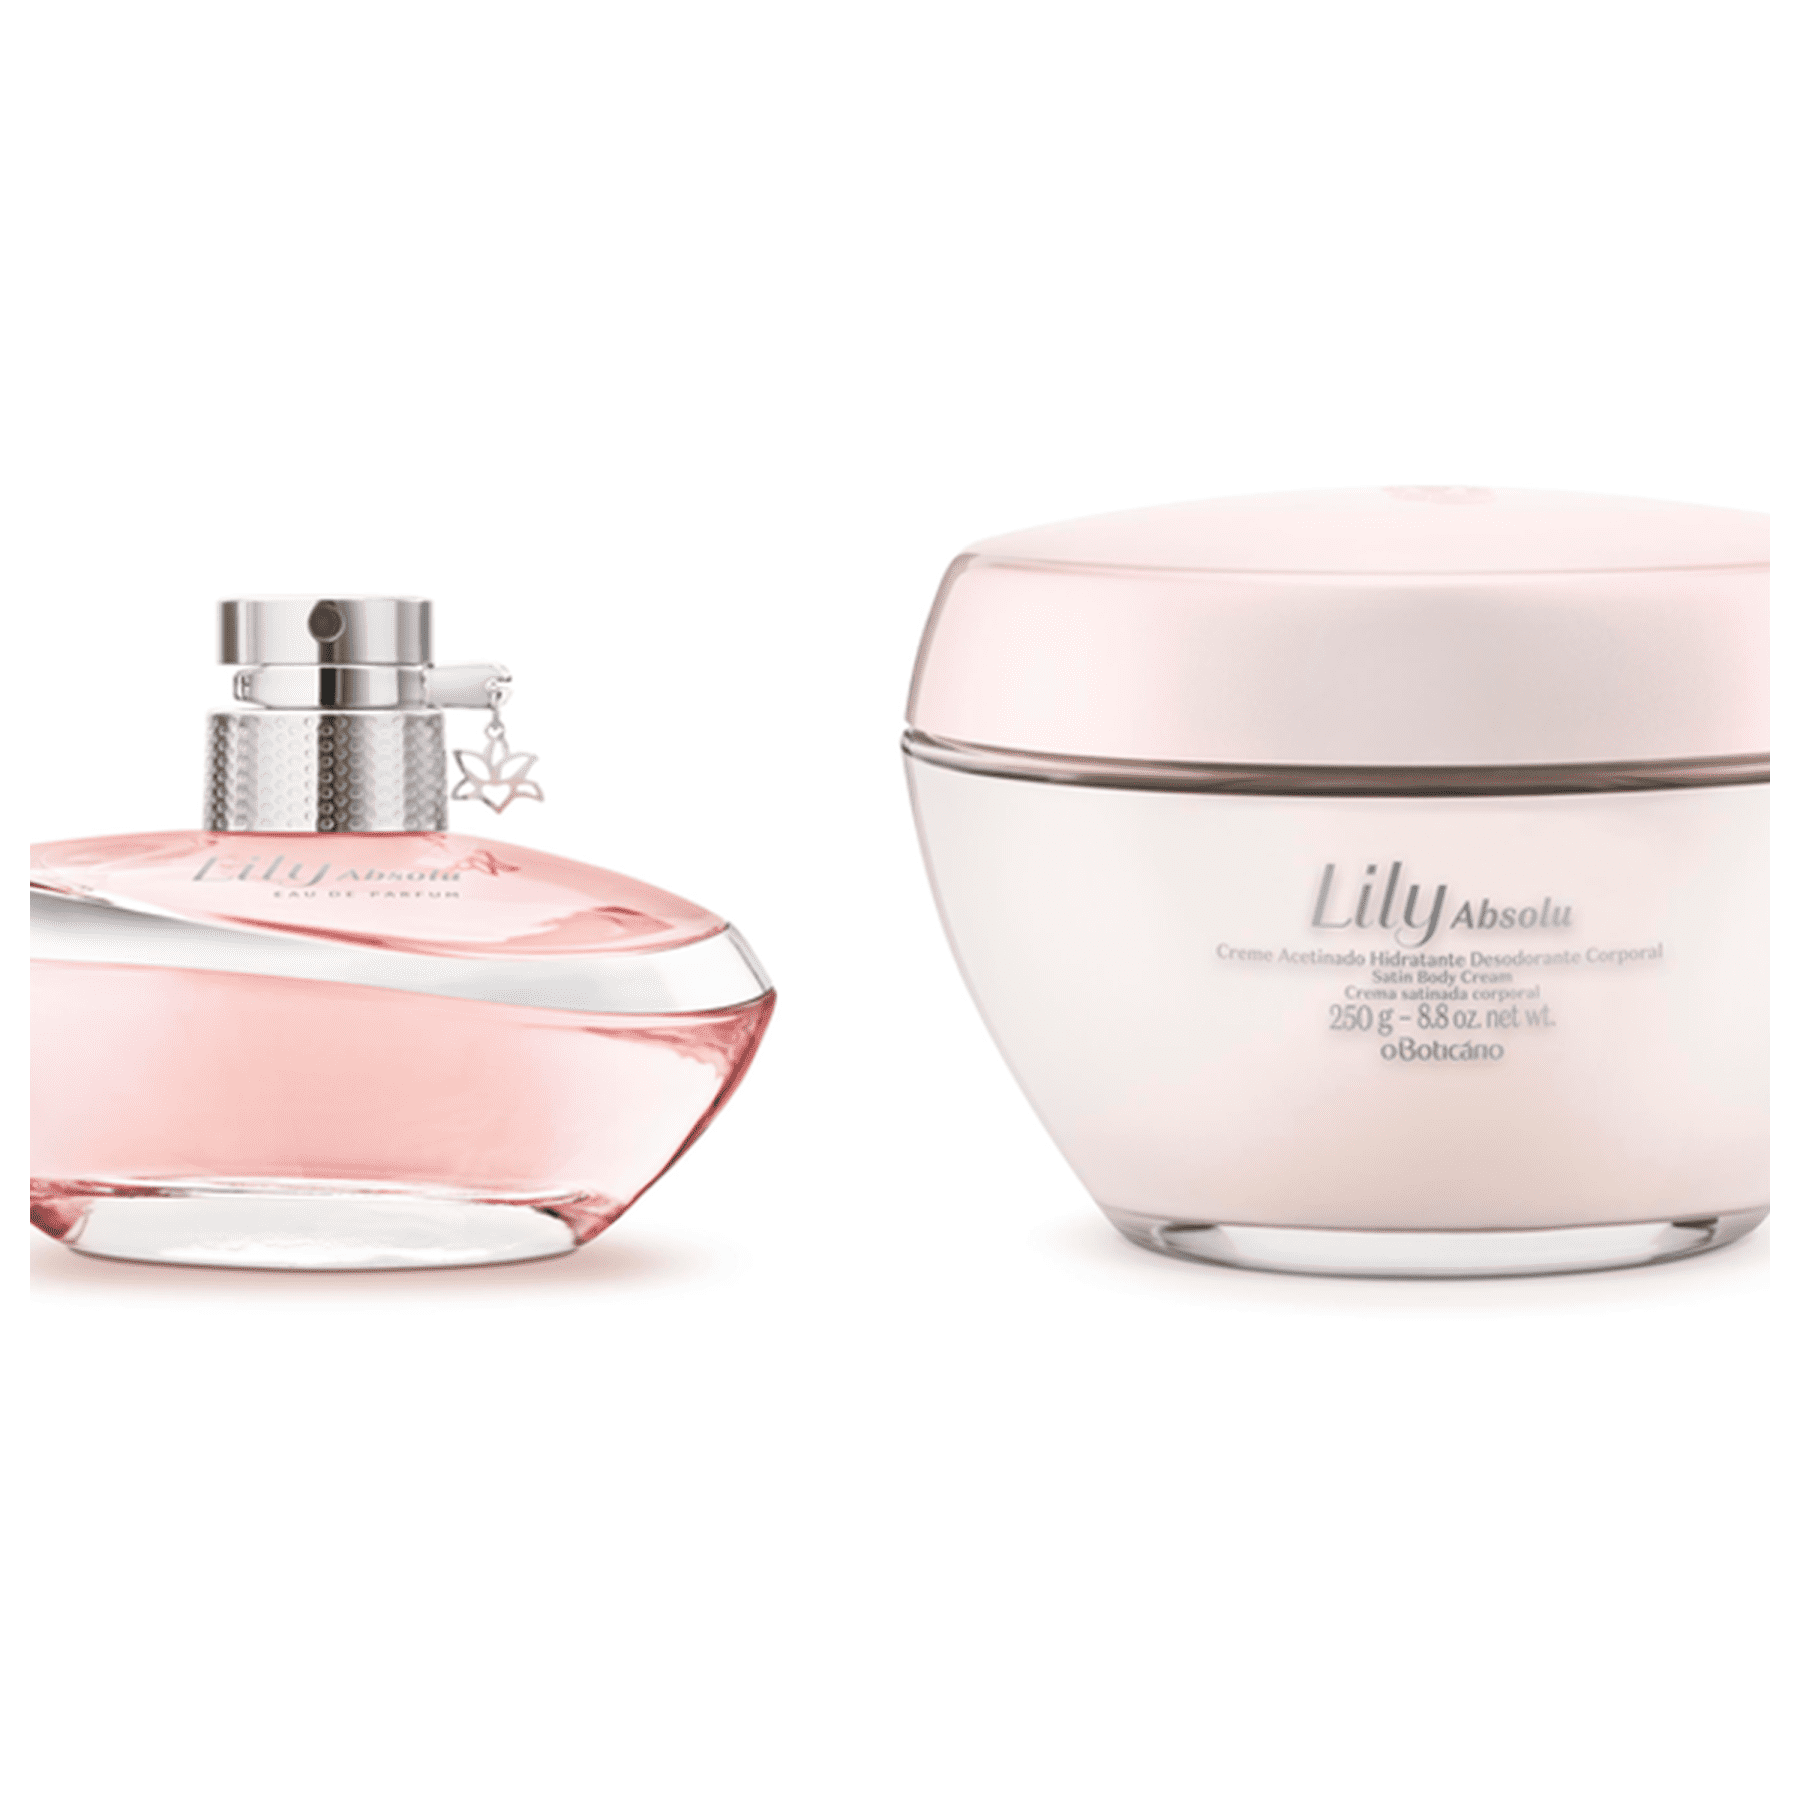 Kit Lily Absolu: Eau De Parfum, 75 Ml + Moisturizing Cream Body Deodorant 250g - o Boticario